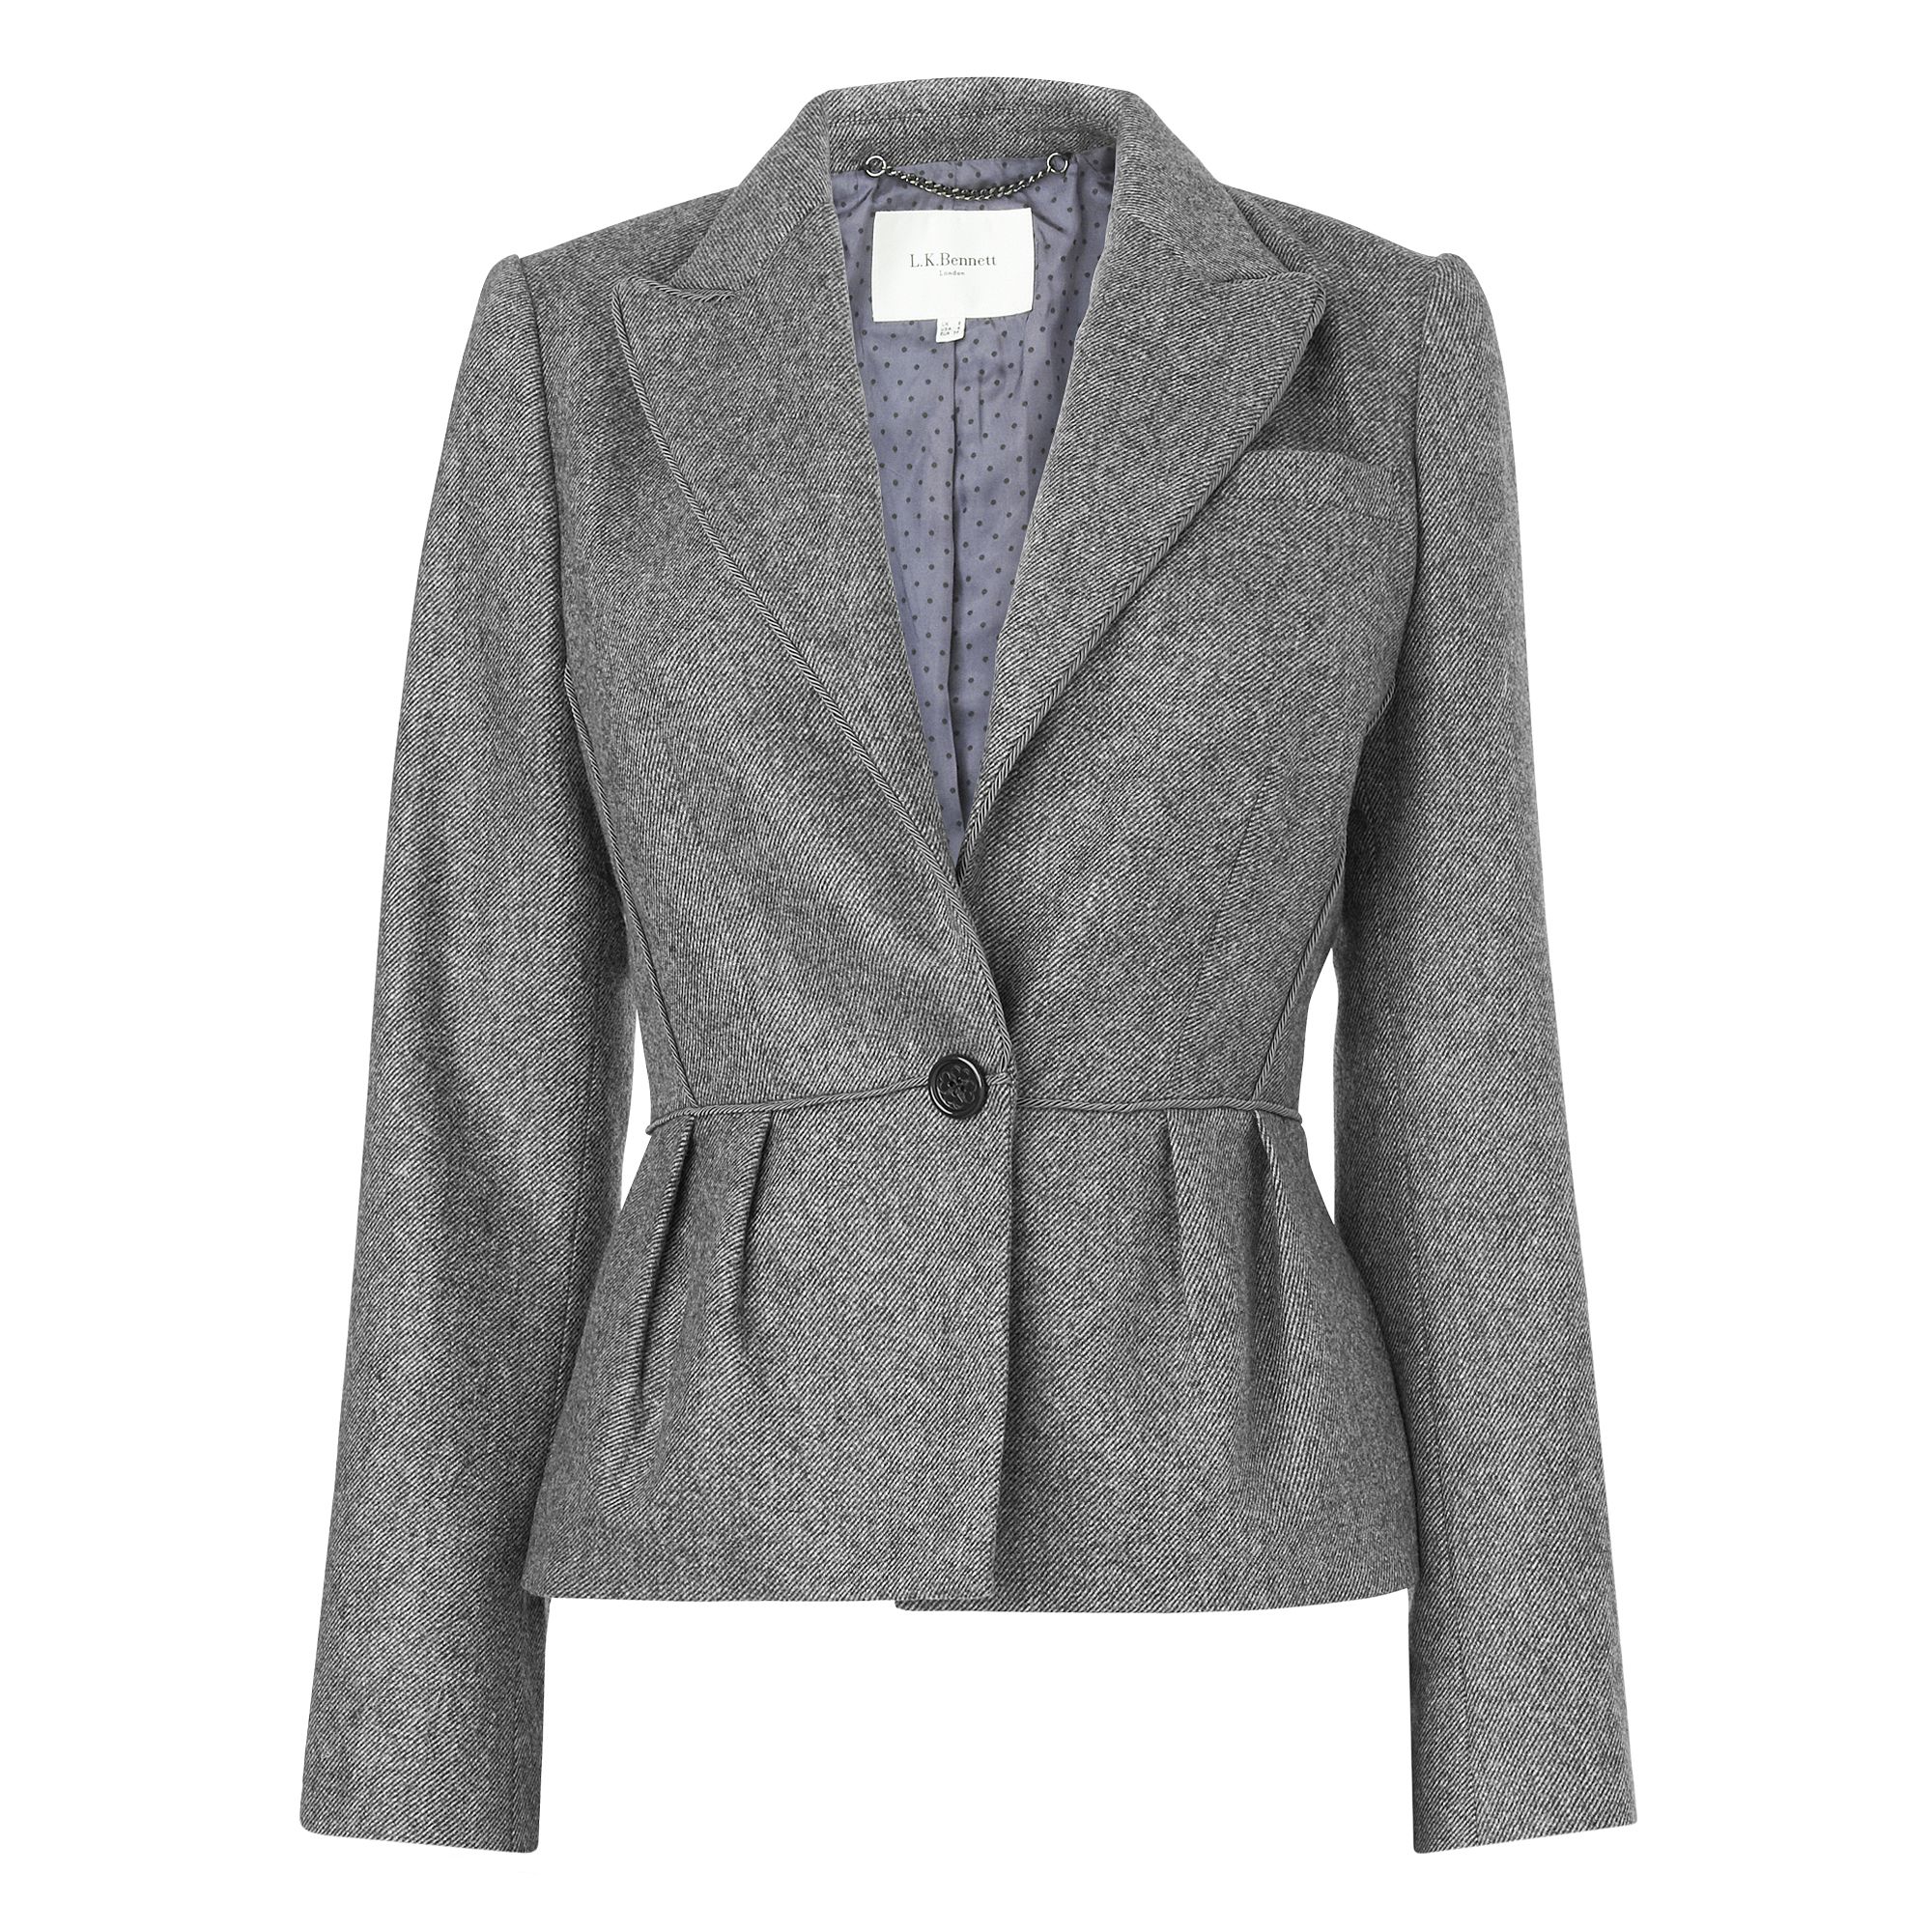 Lk Bennett Brunel Jacket in Gray (Grey) | Lyst